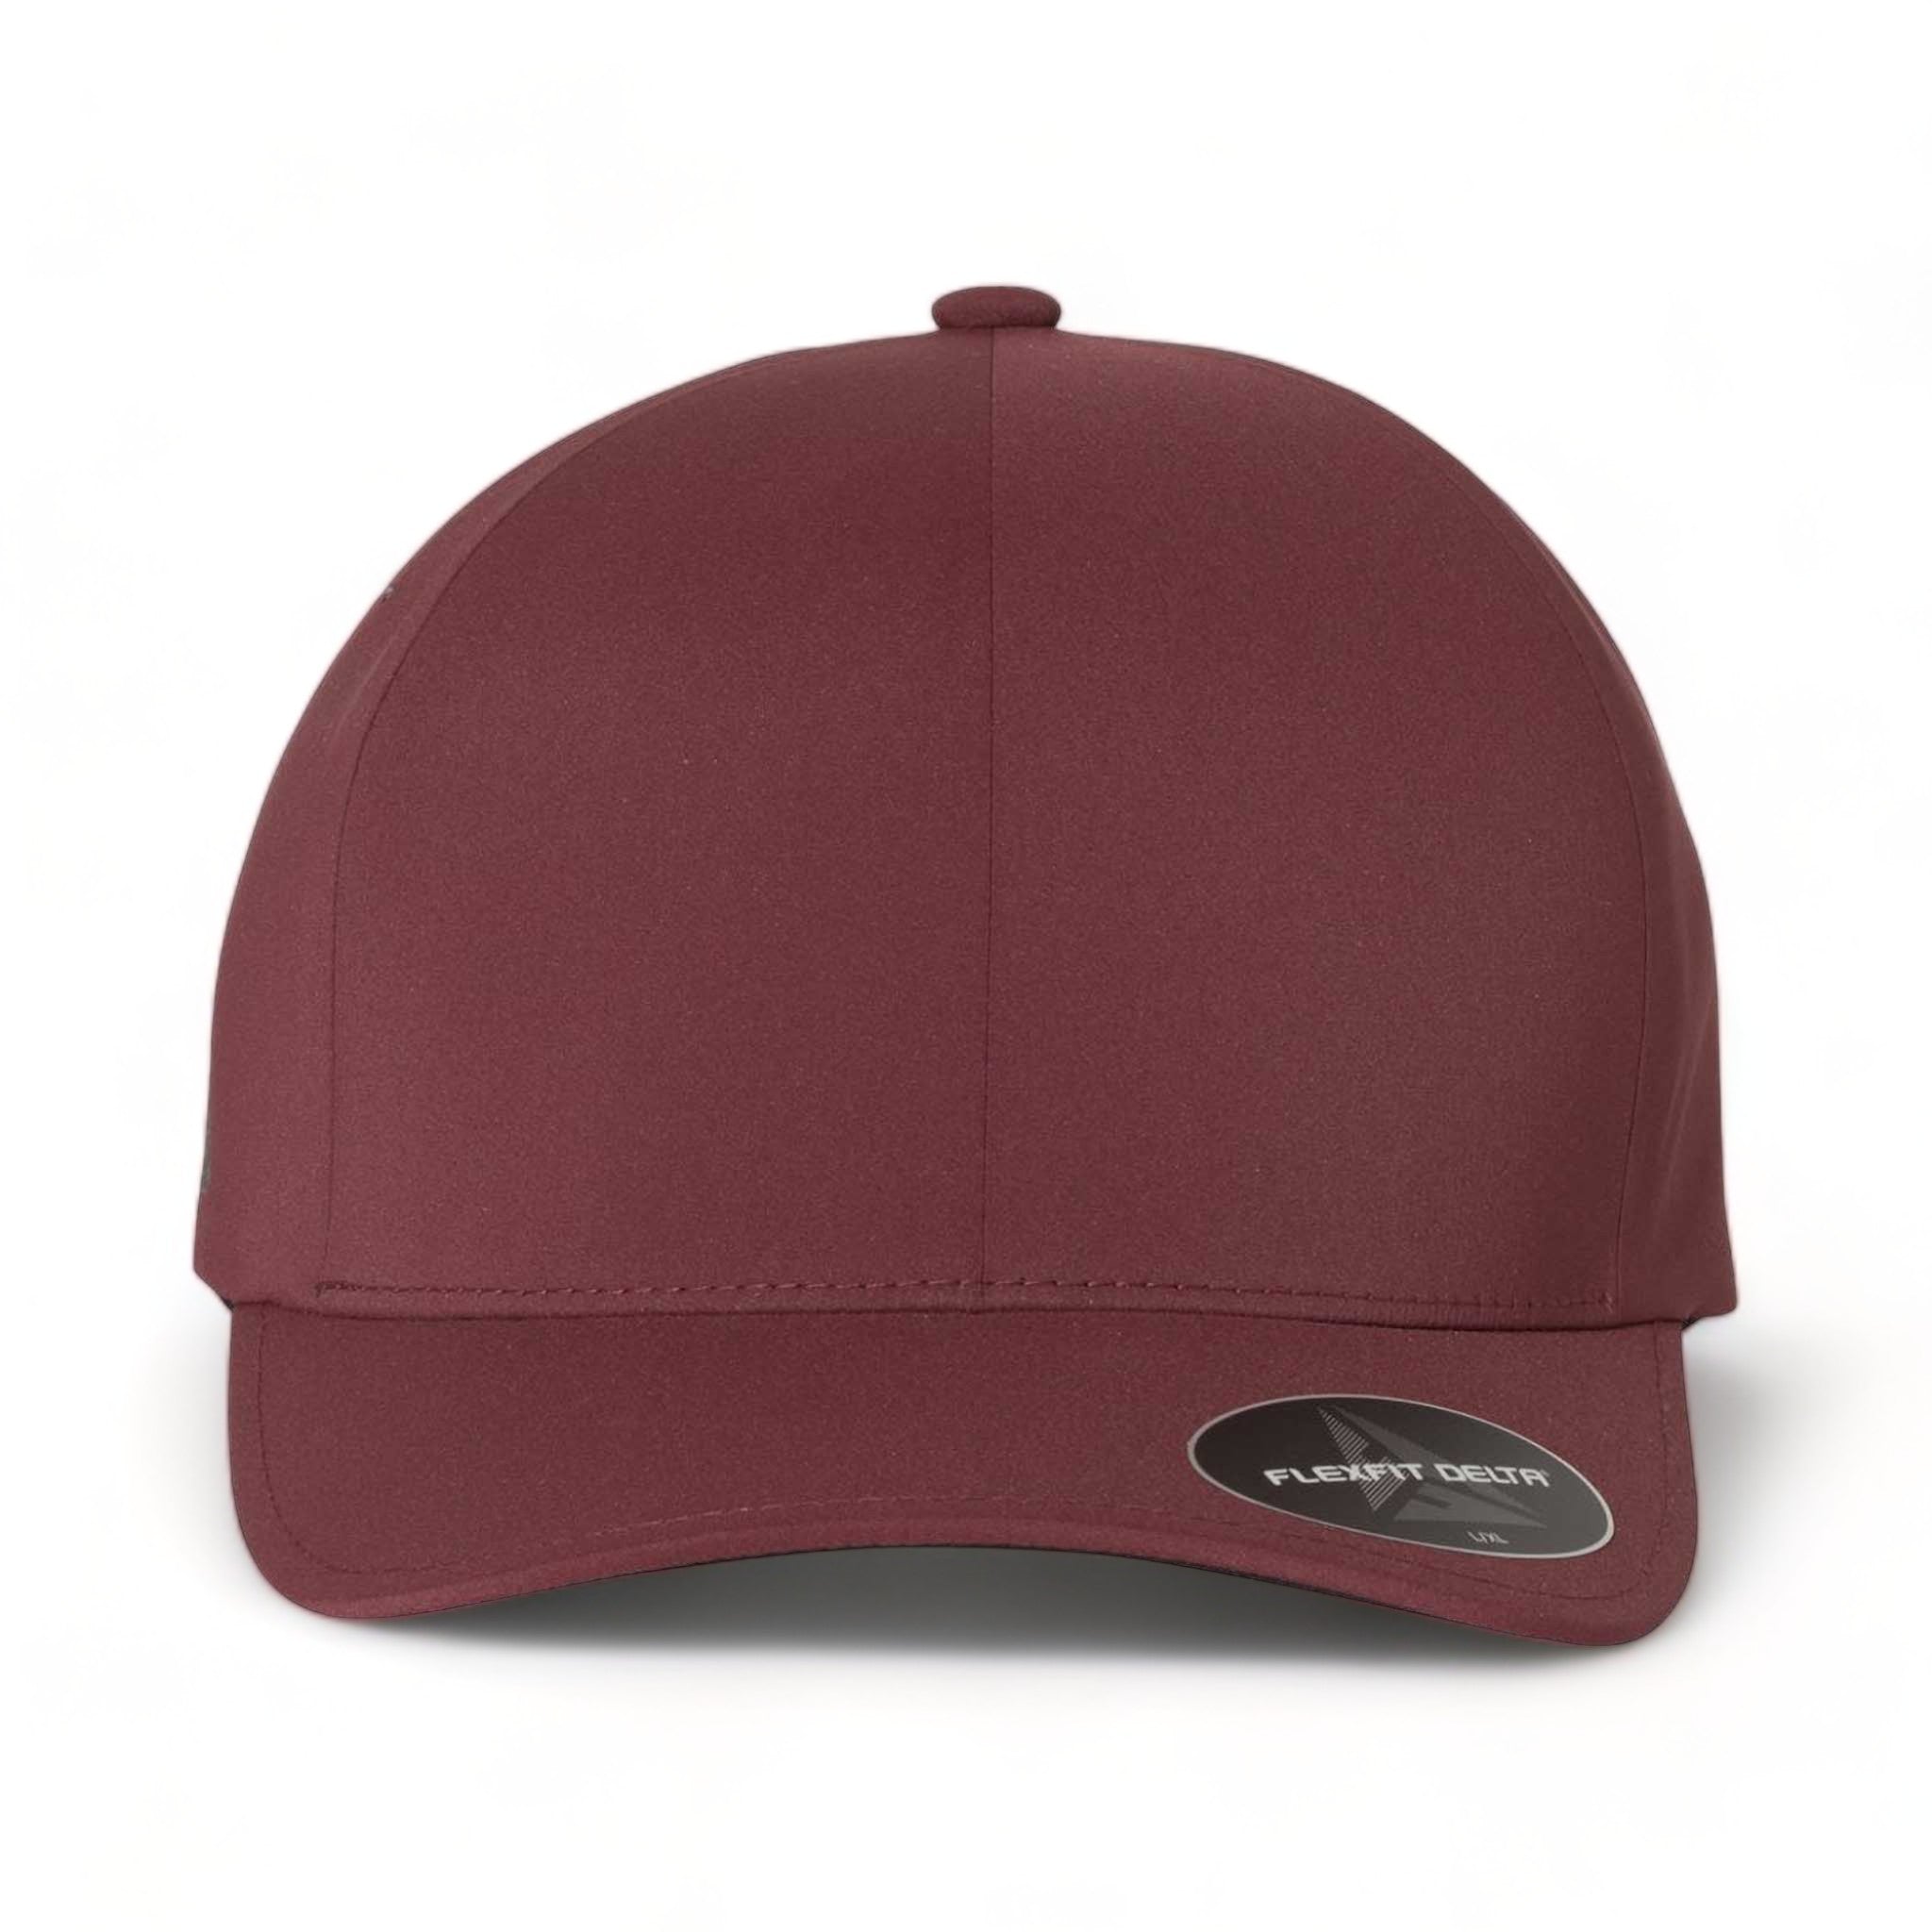 Front view of Flexfit 180 custom hat in maroon